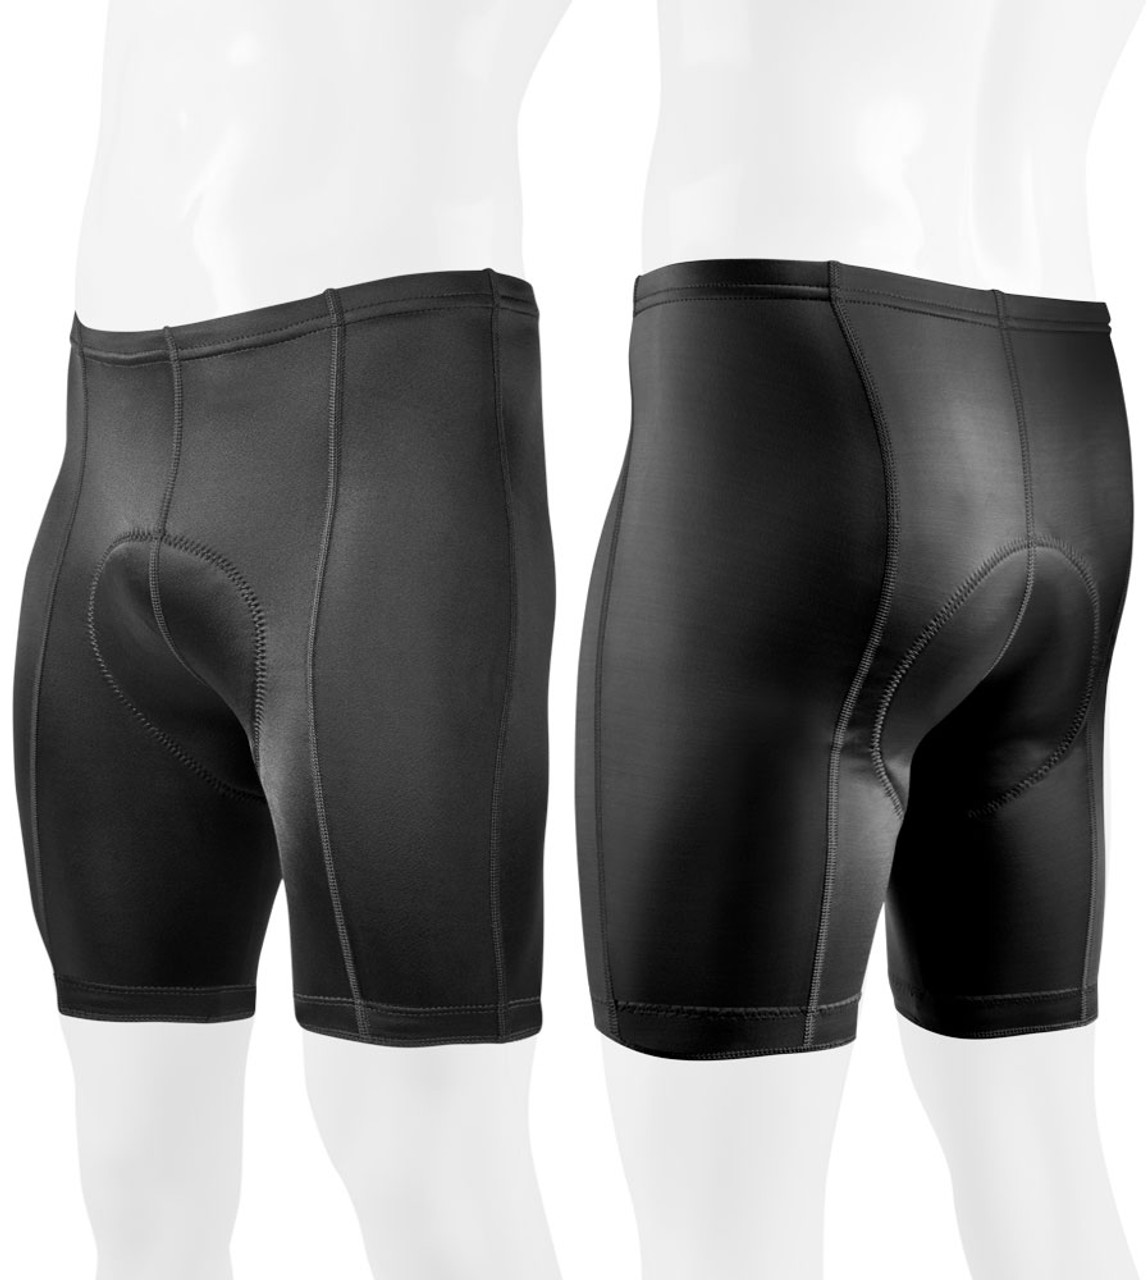 Men's Petite Padded Bike Shorts | Black 5 inch Inseam | Aero Tech